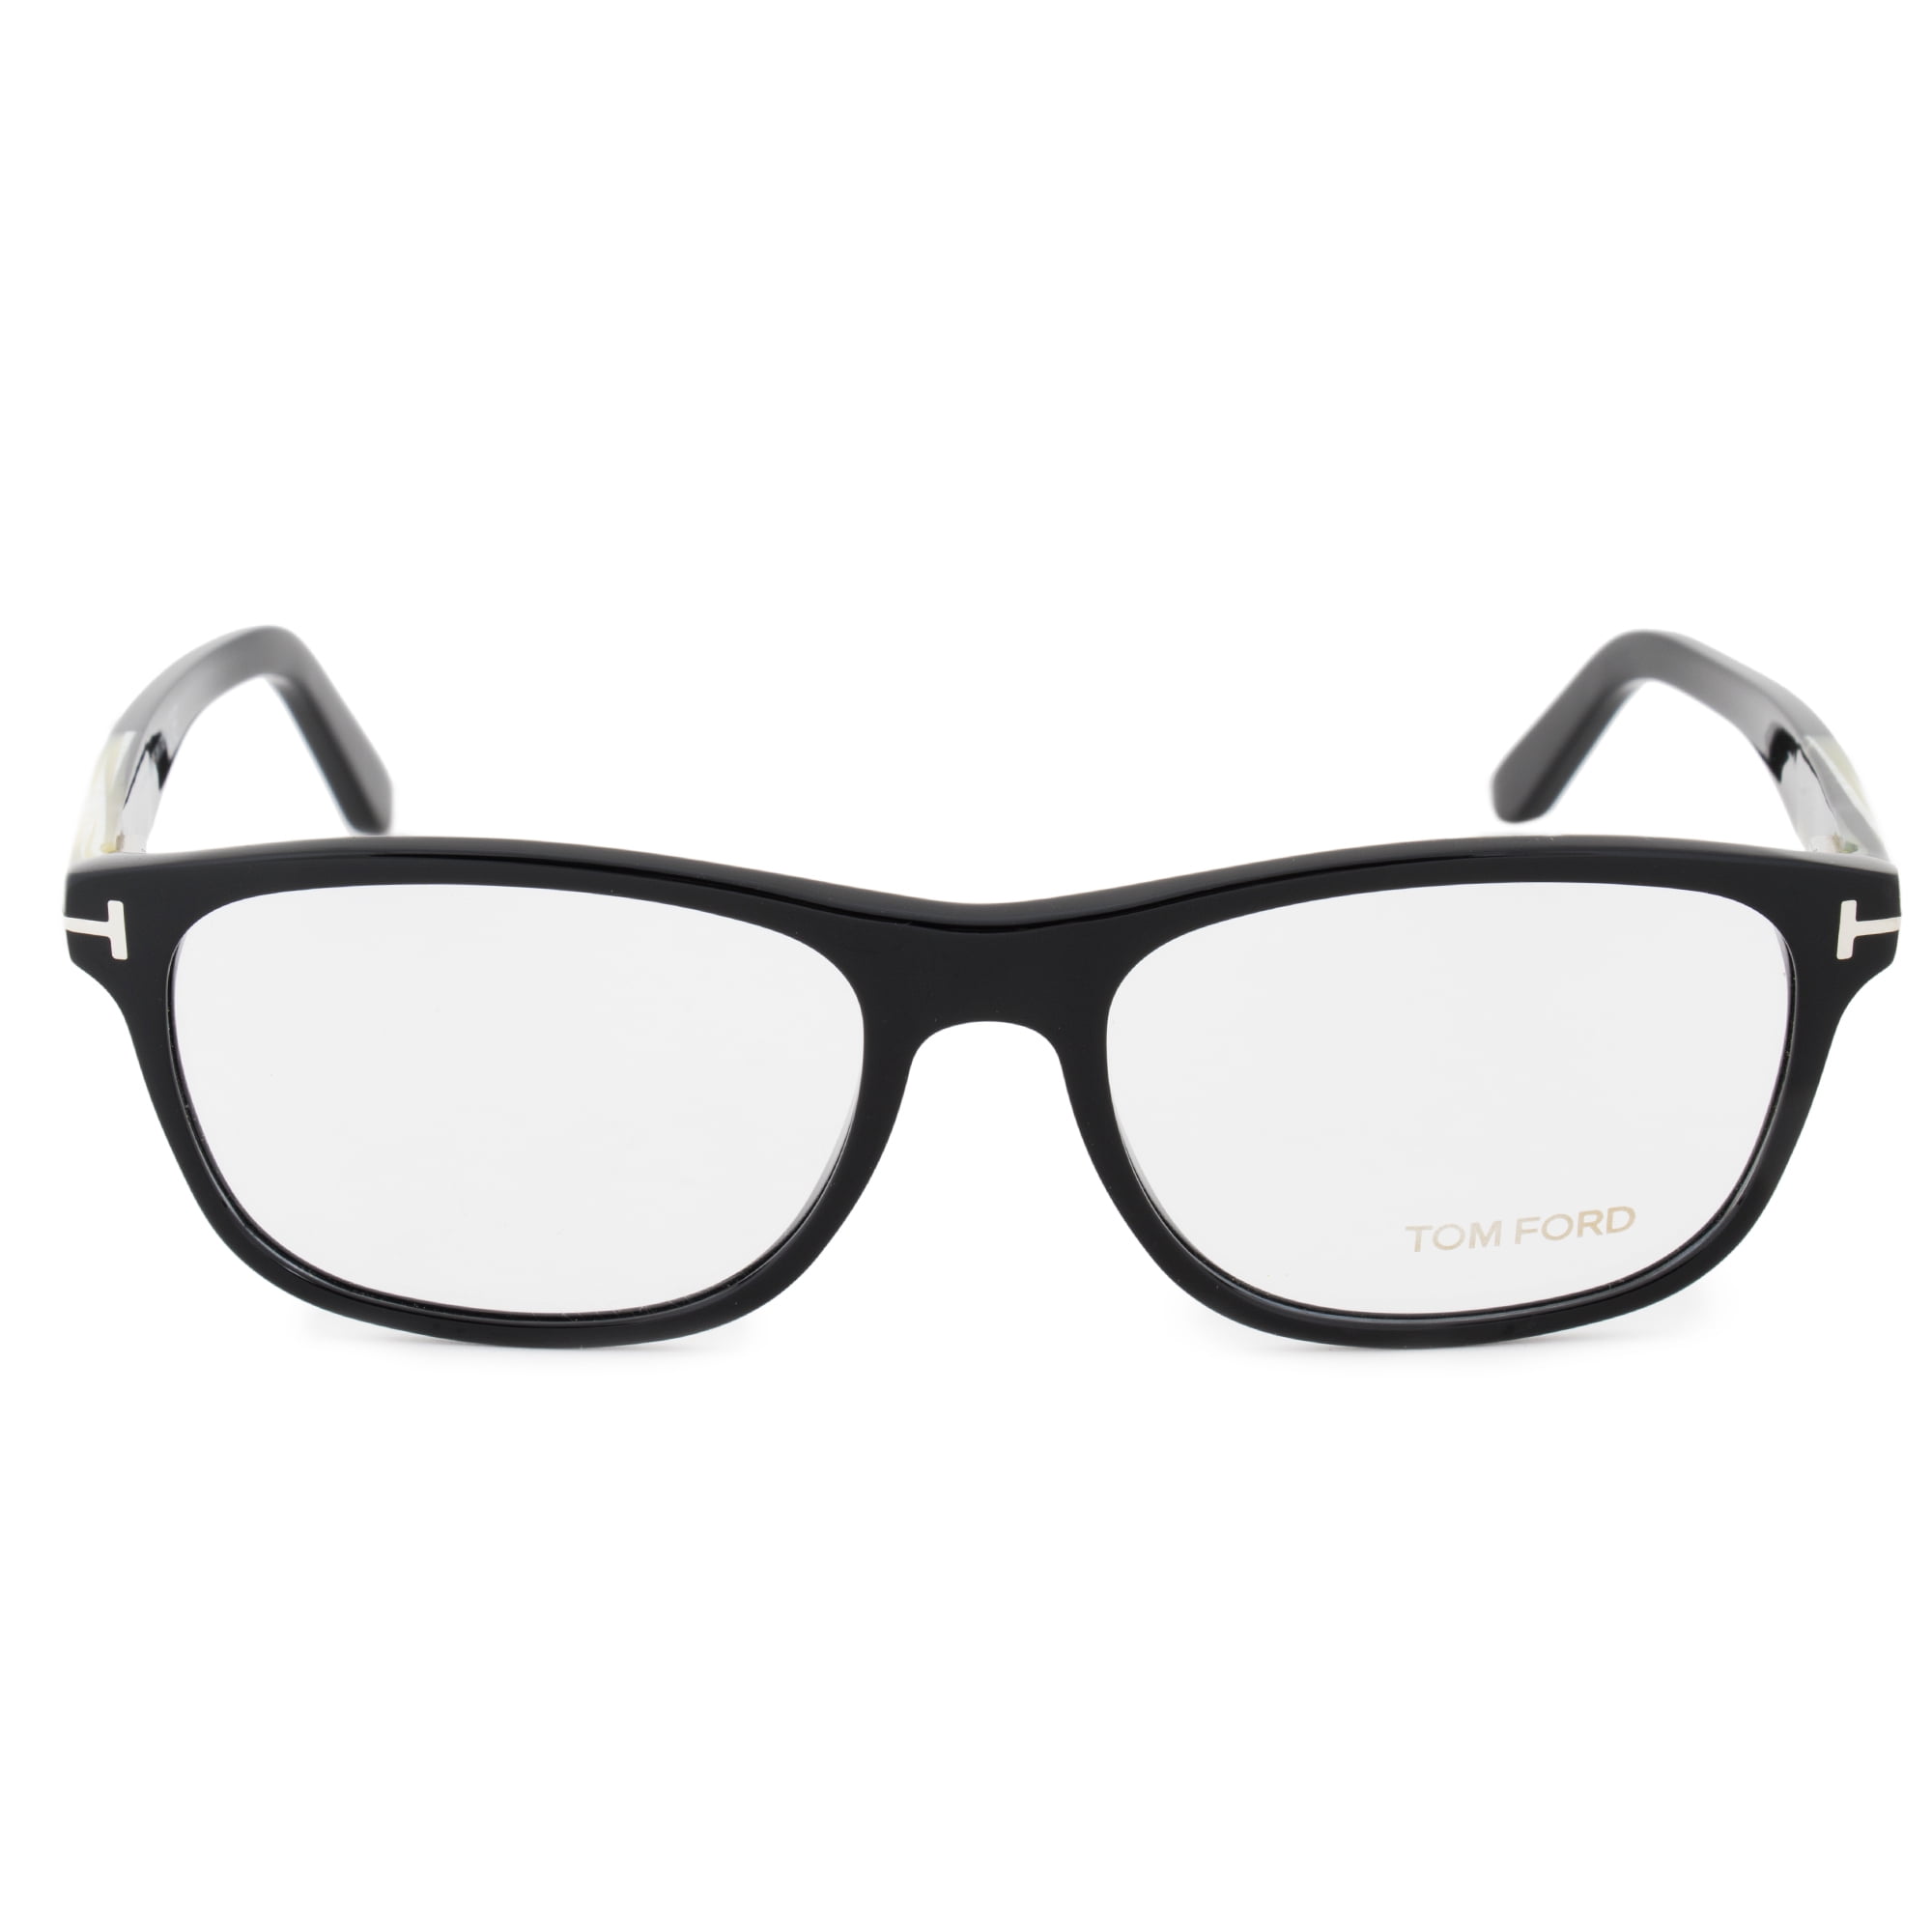 Tom Ford FT5430 001 56 Rectangular Eyeglasses Frames | Walmart Canada